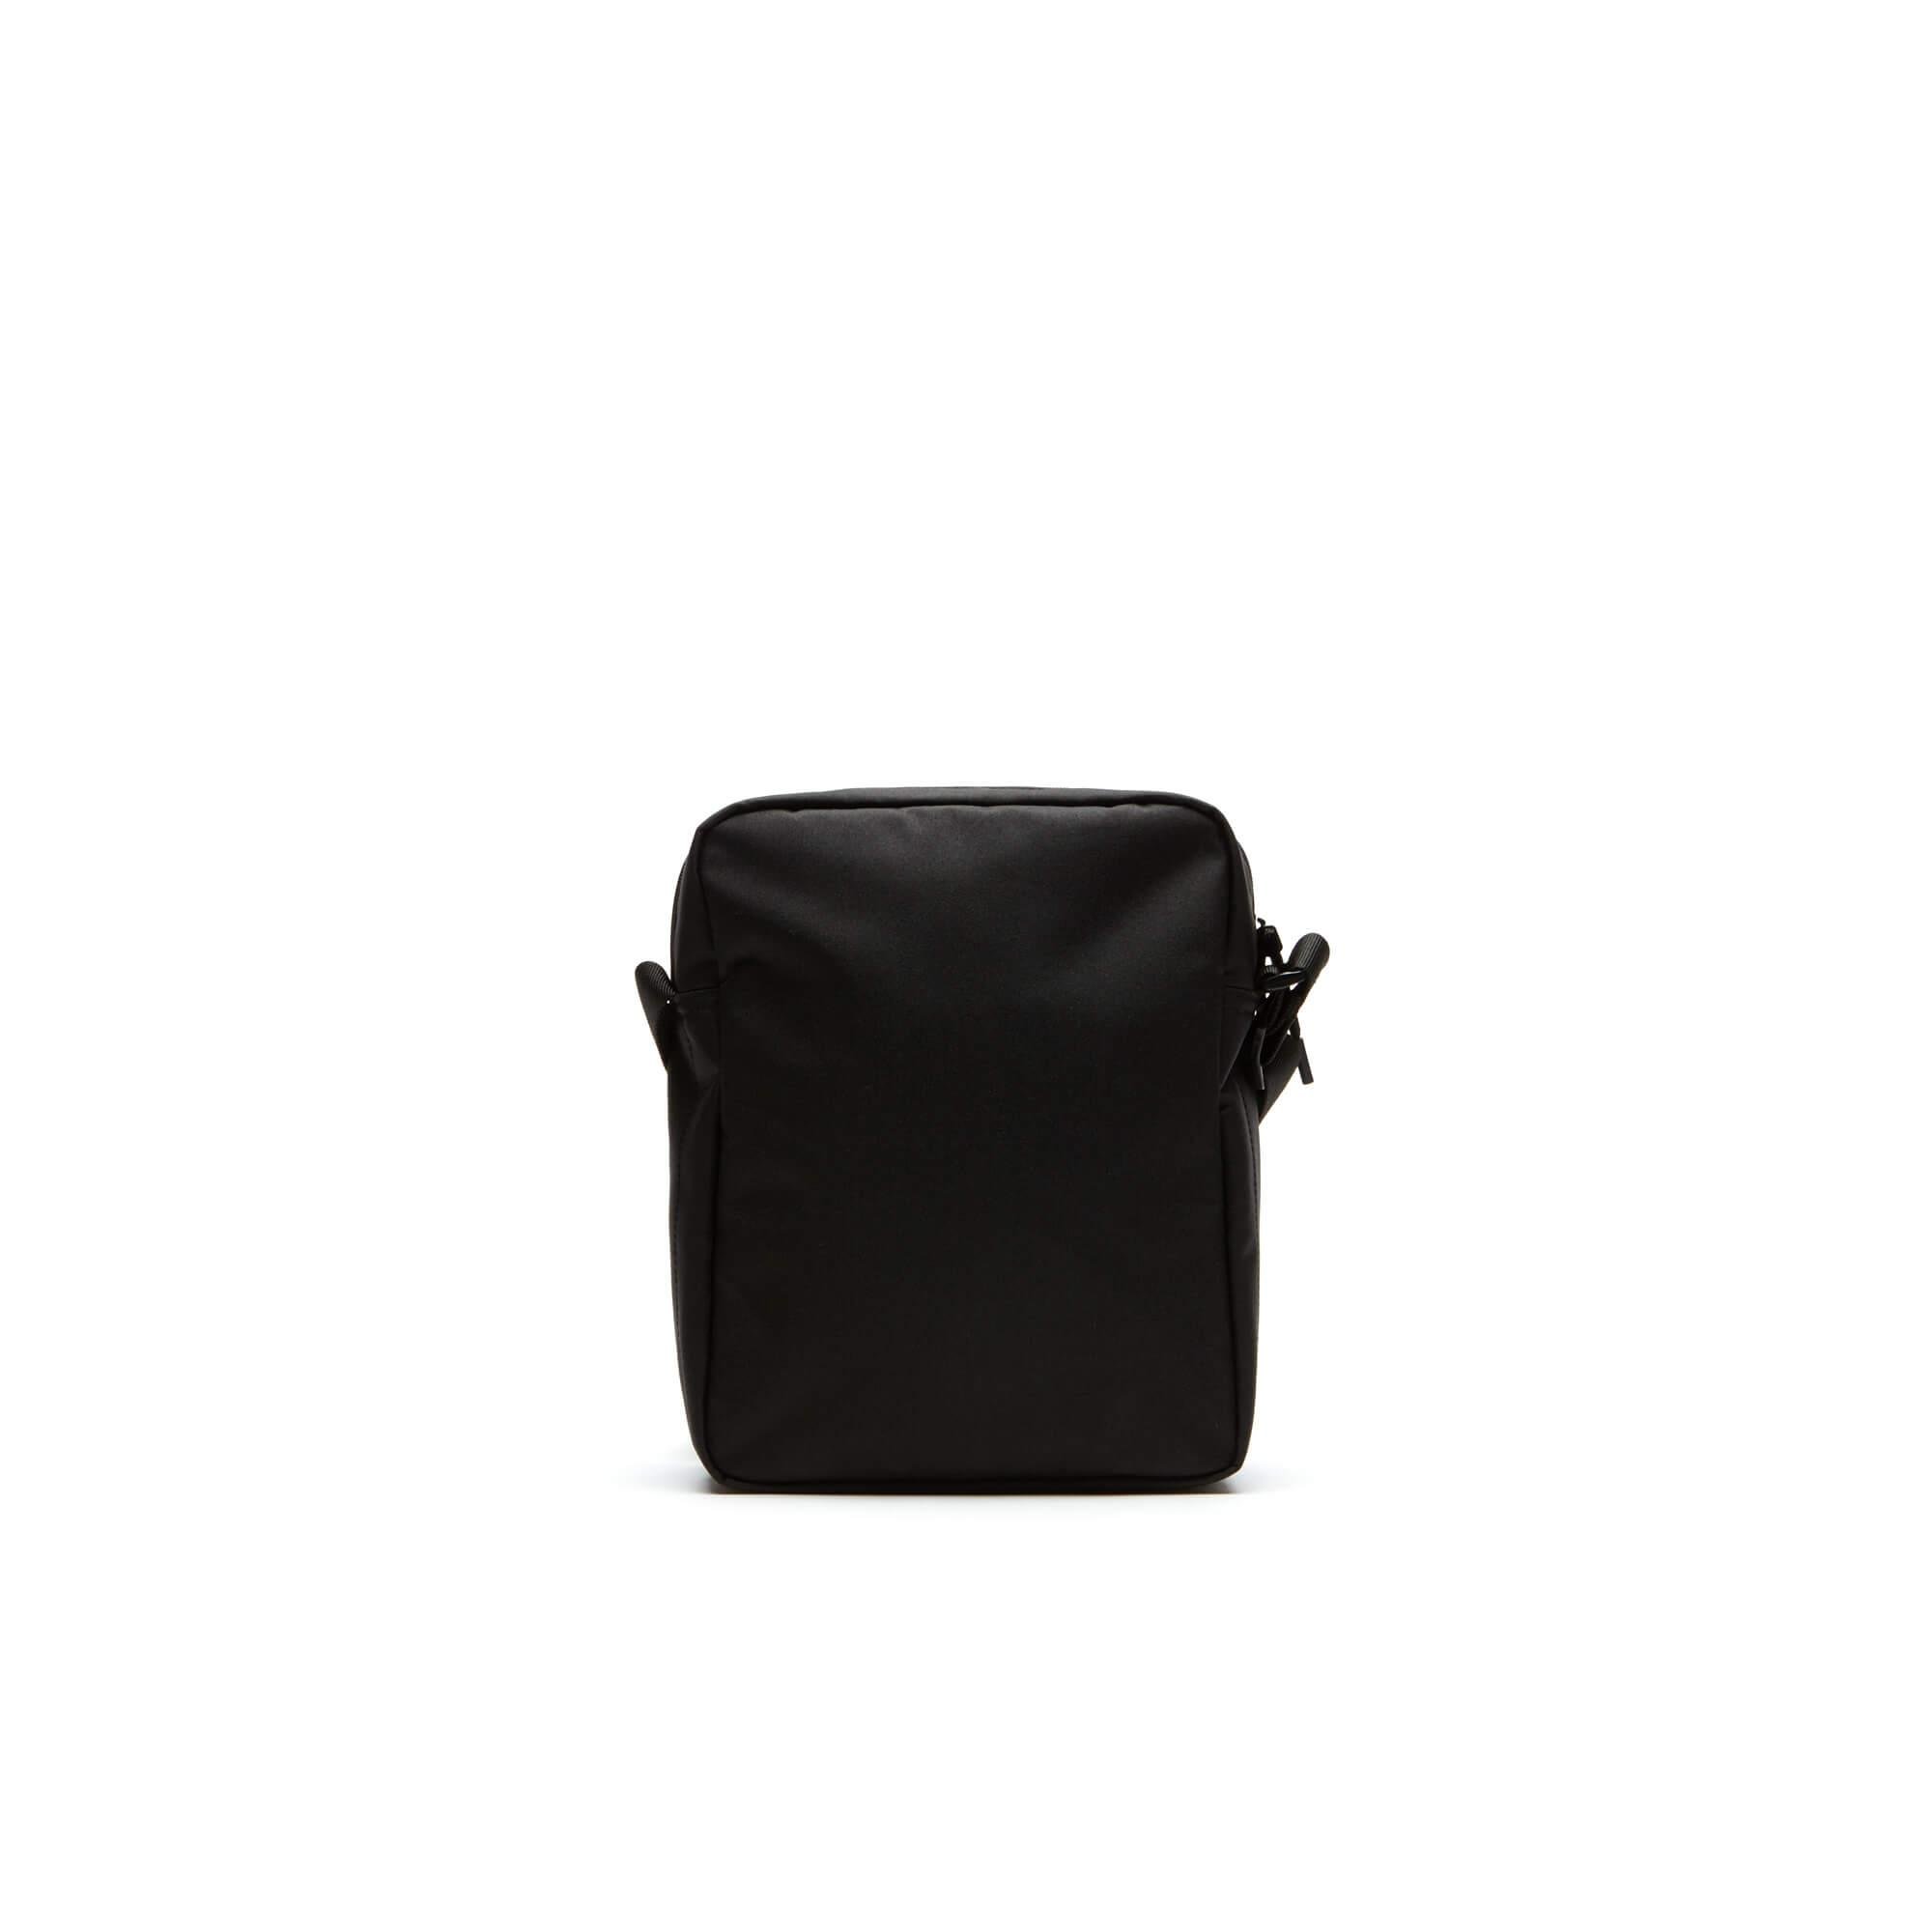 Lacoste Men's Neocroc Canvas Zip Bag